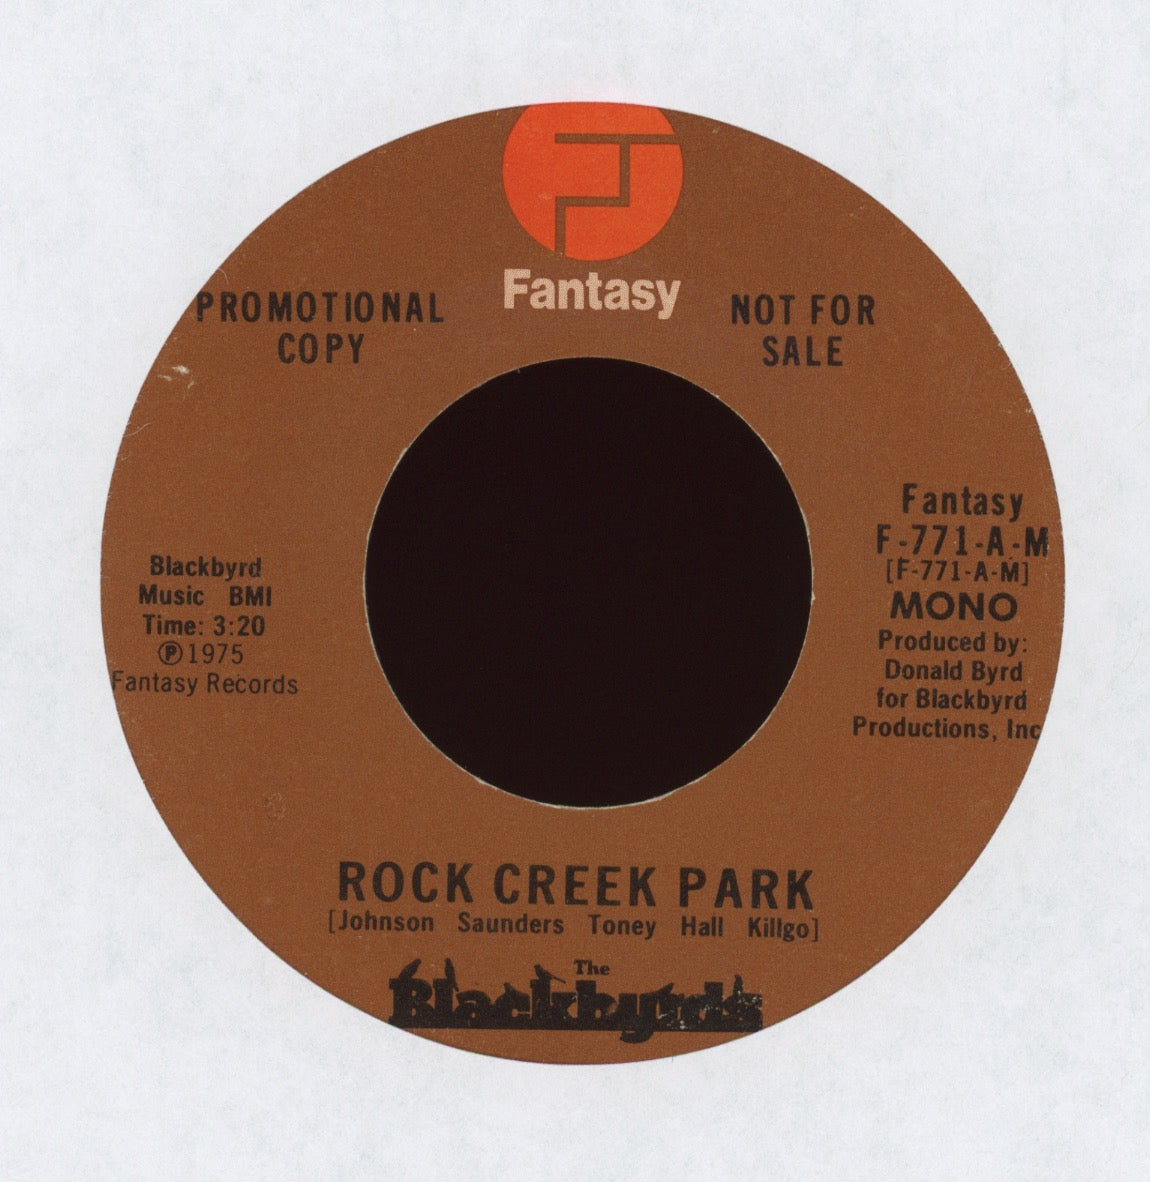 The Blackbyrds - Rock Creek Park on Fantasy Promo 70's Soul Funk 45